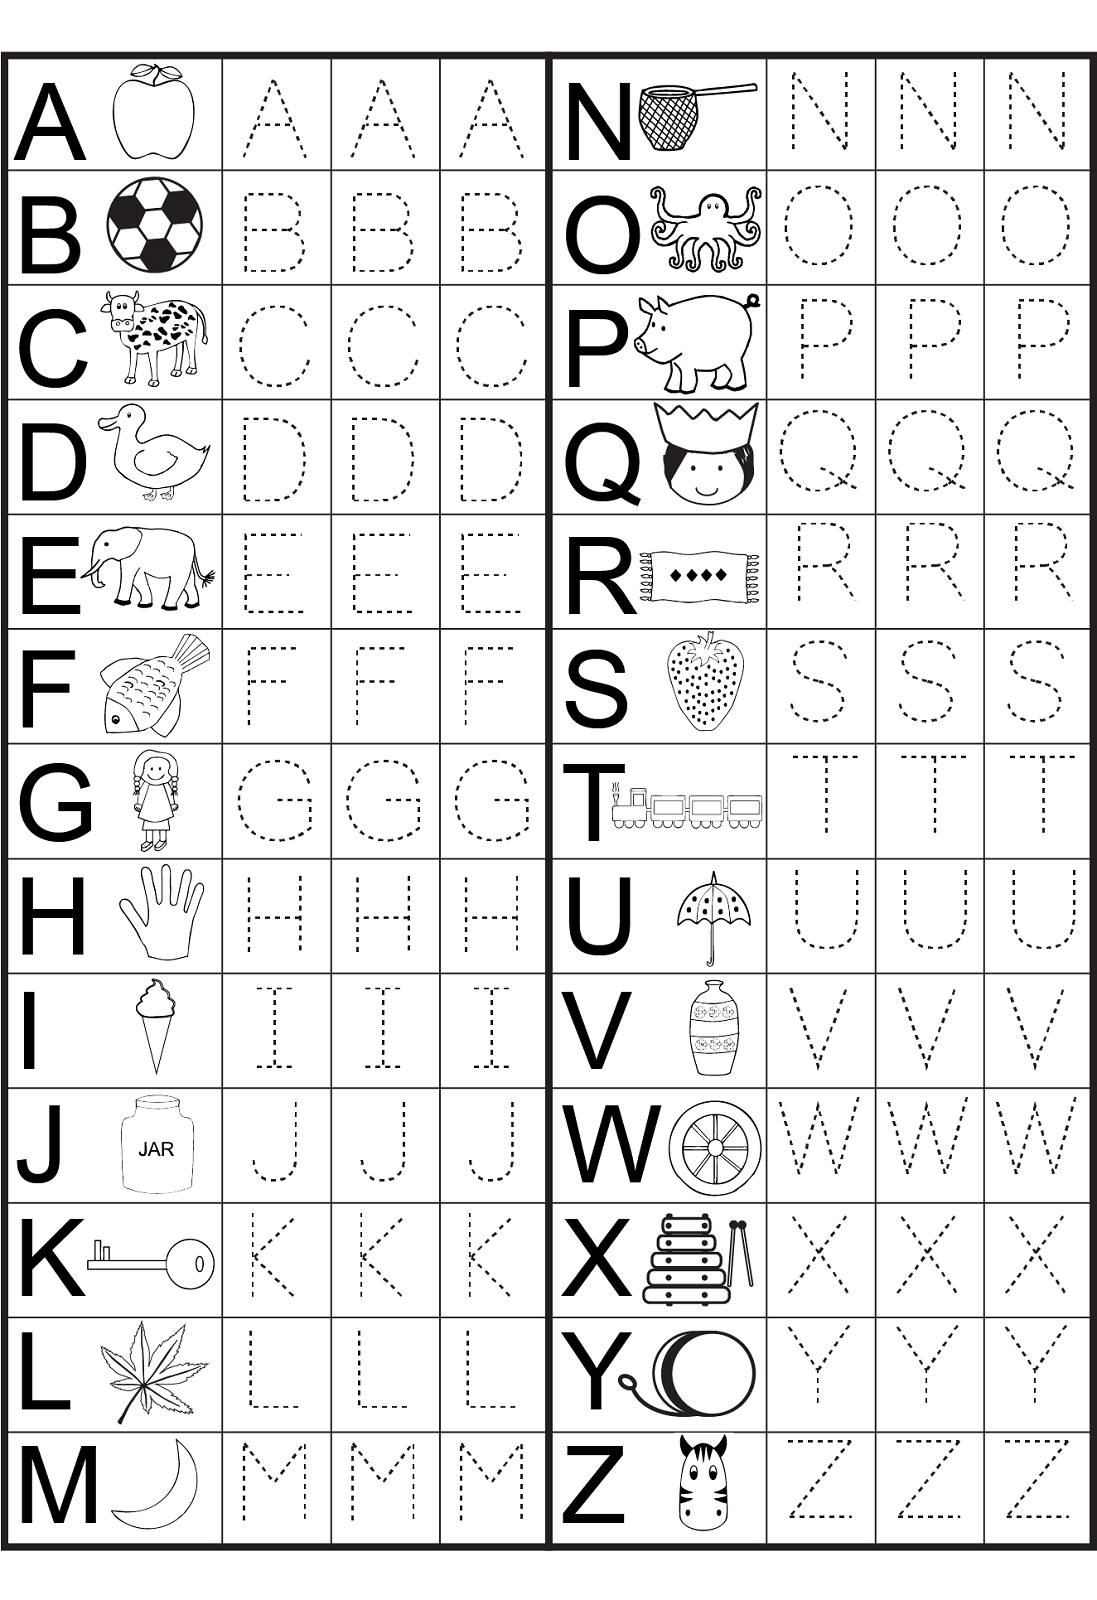 Kindergarten Alphabet Worksheets To Print | Preschool throughout Alphabet I Worksheets